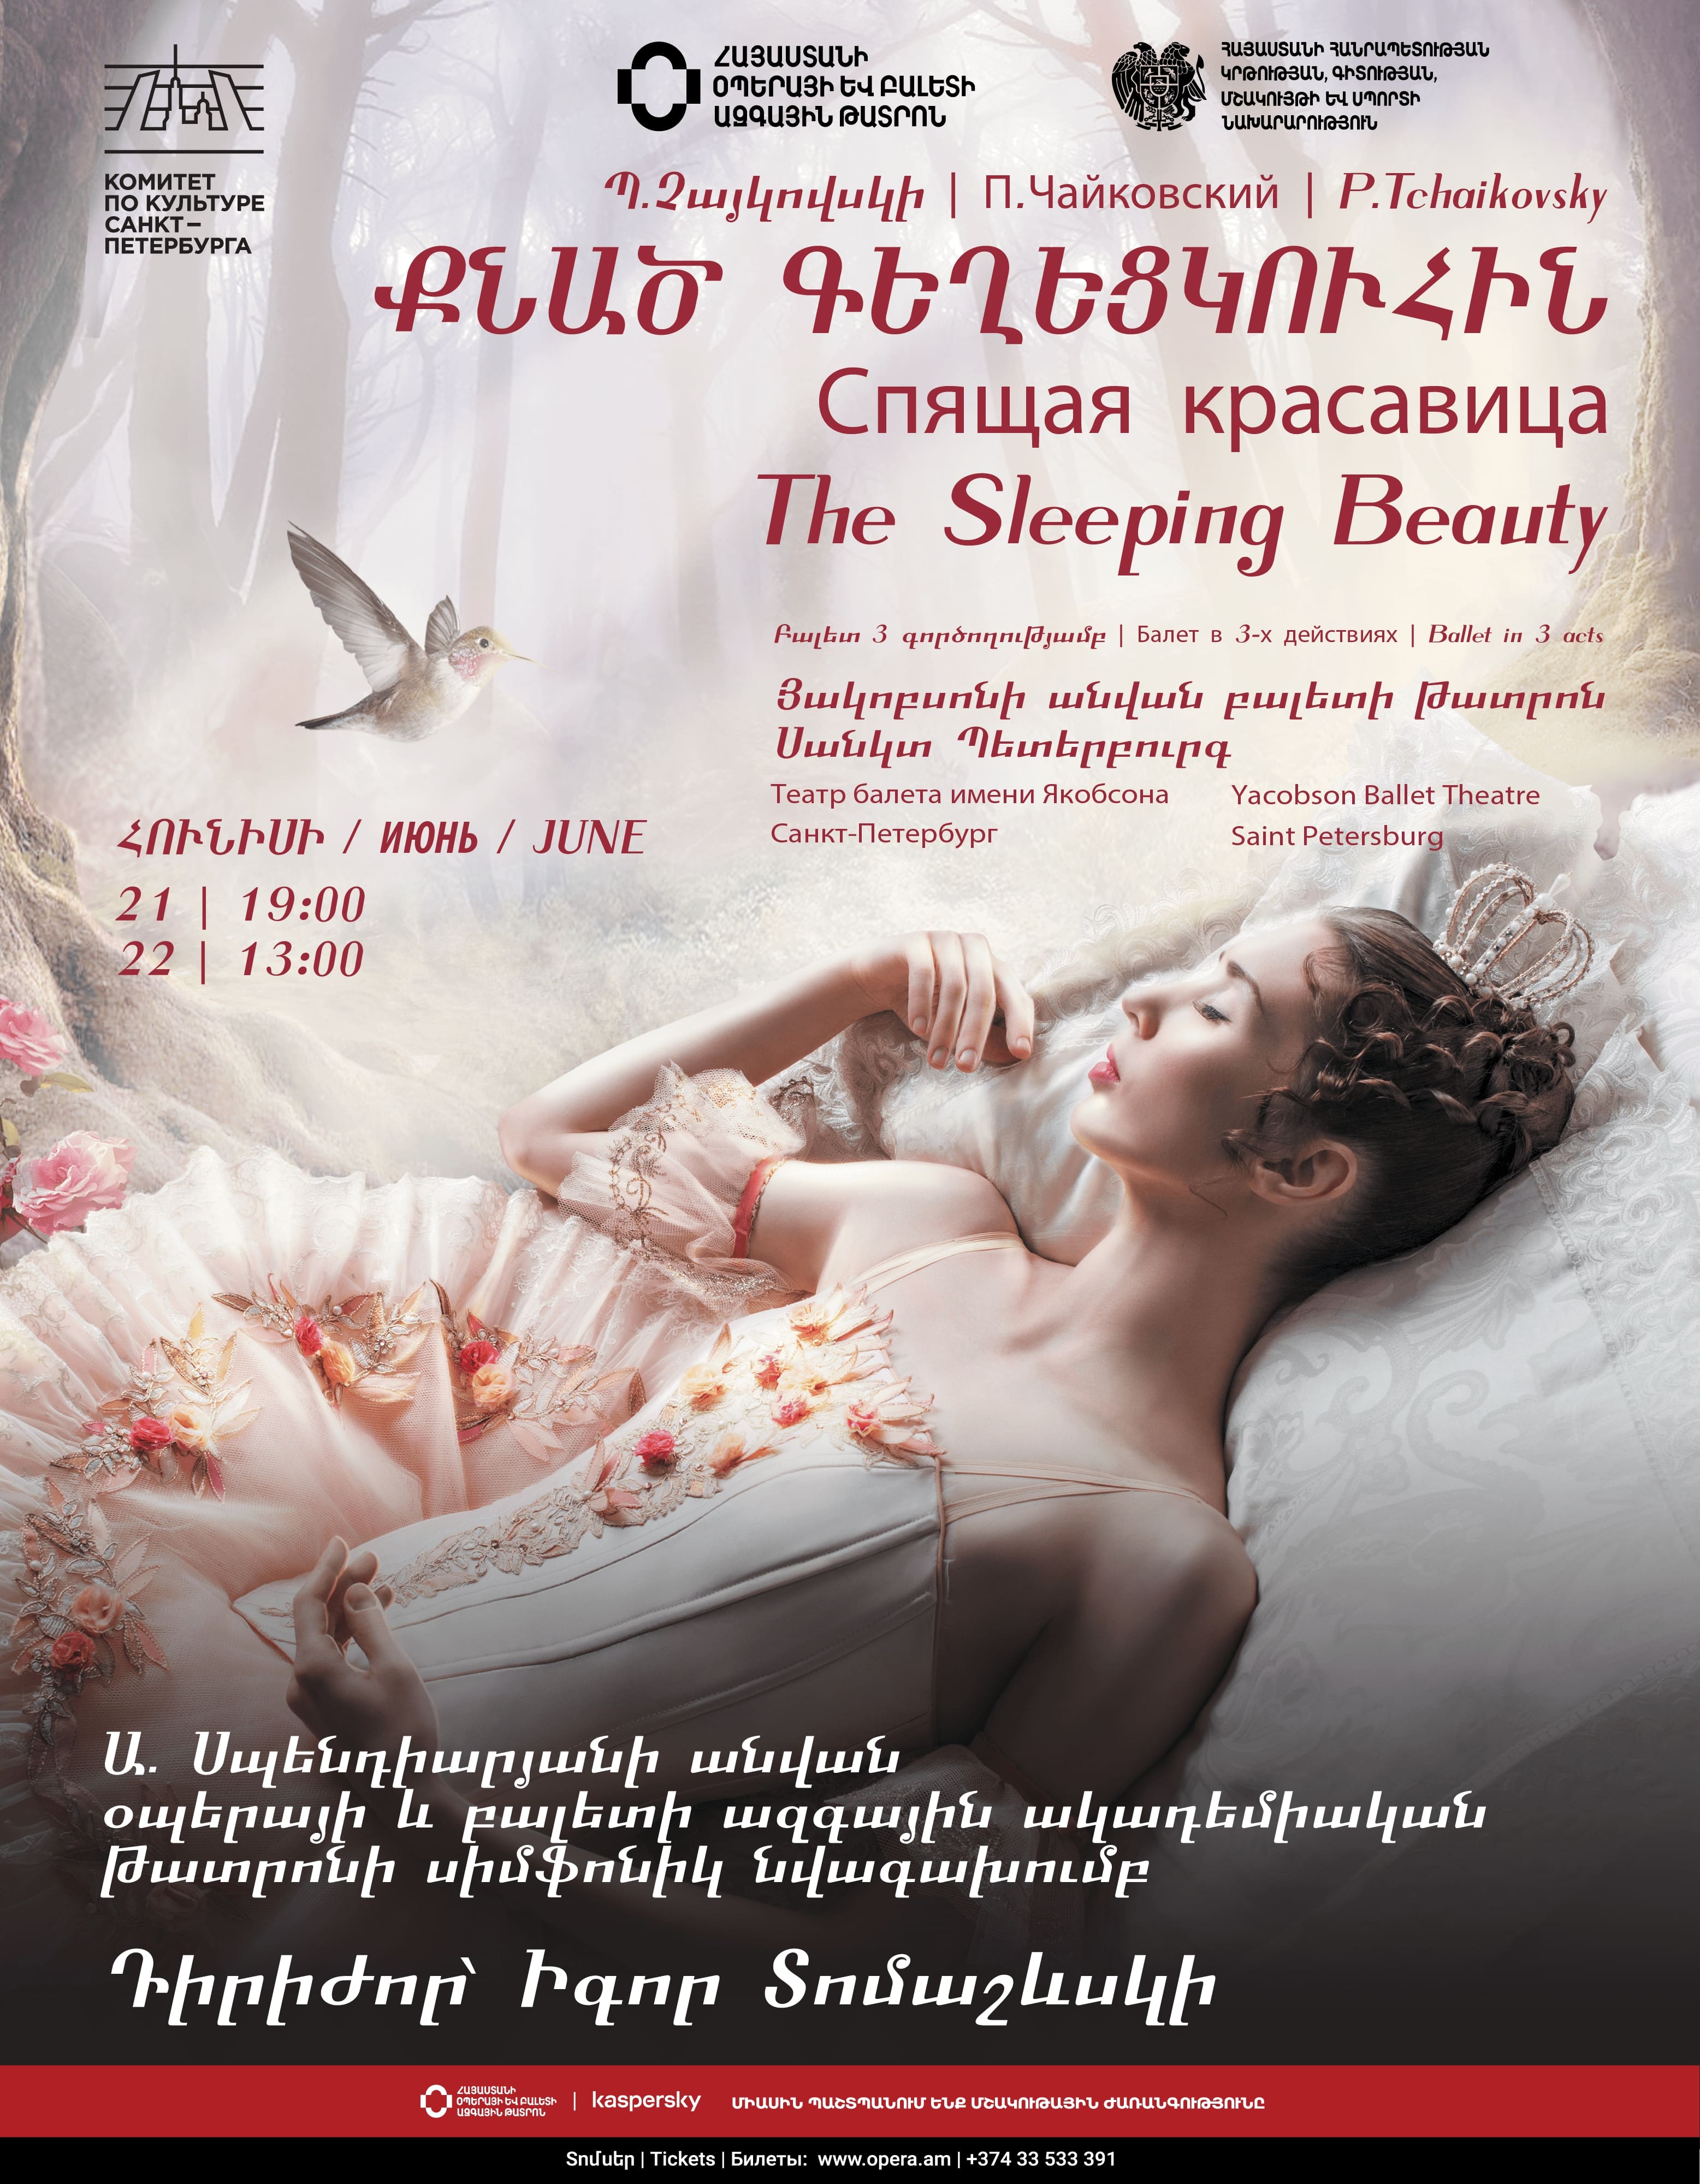 P. Tchaikovsky "The Sleeping Beauty"